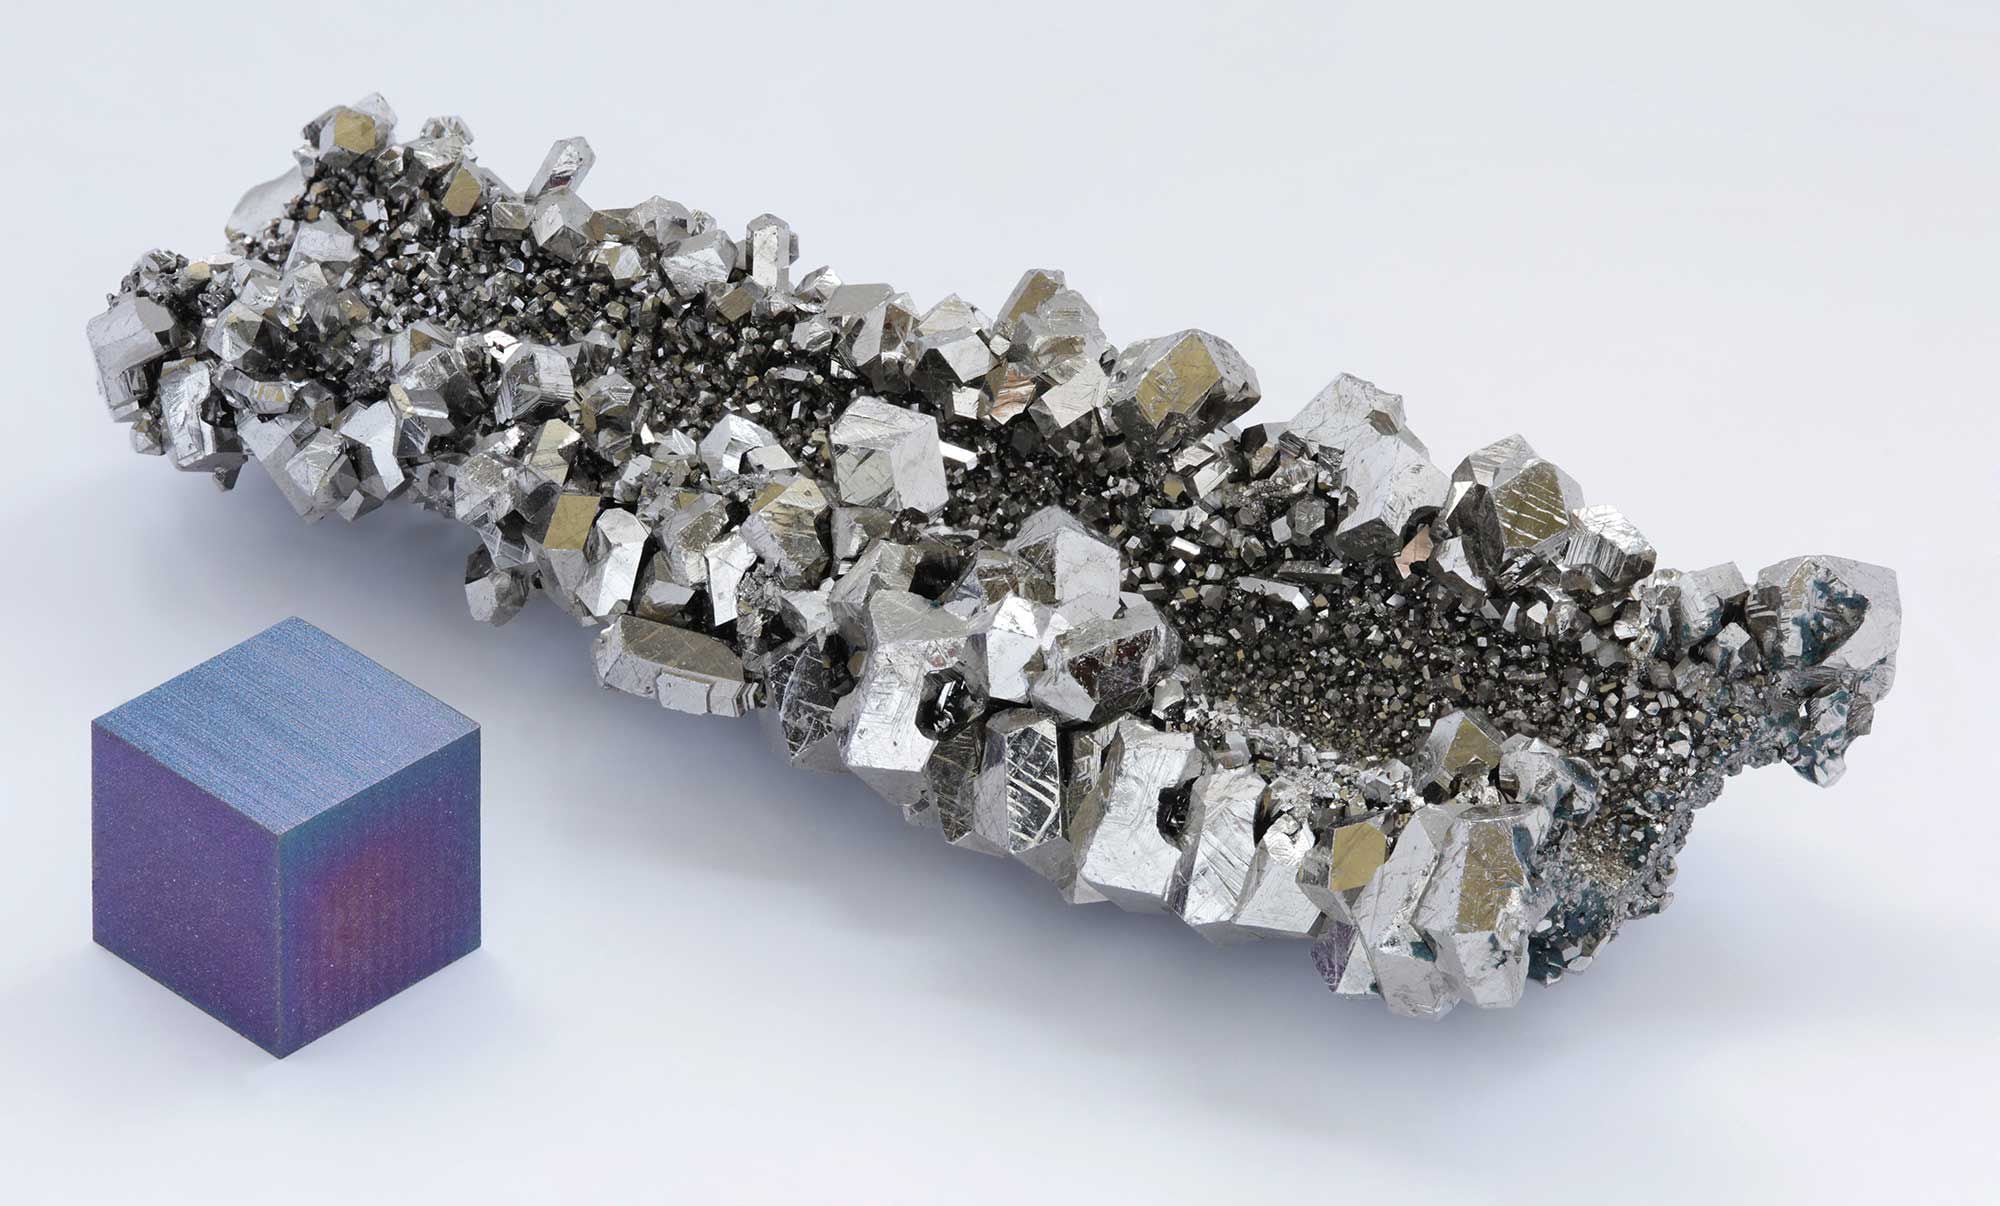 Niobium crystals next to an anodized cube of 99.95 percent pure niobium.